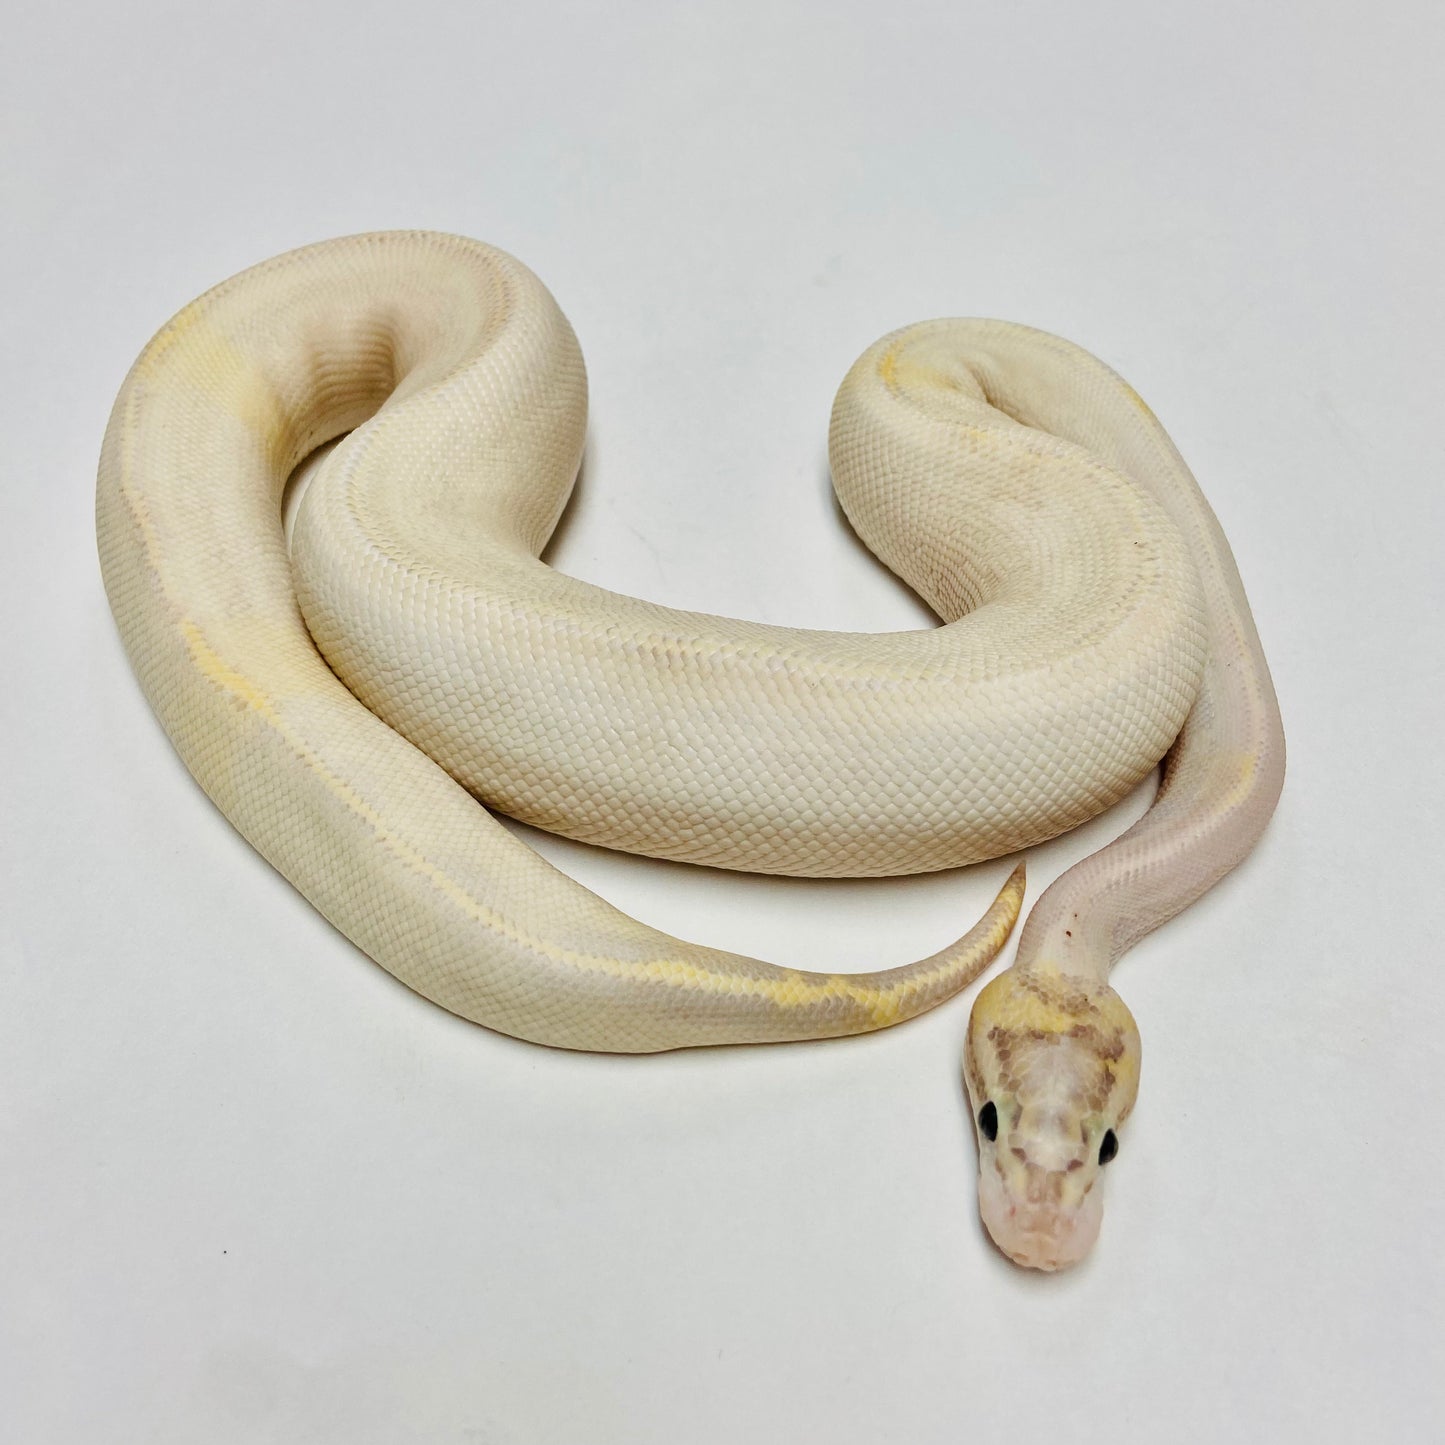 Pastel Ivory Ball Python - Female #2022F01